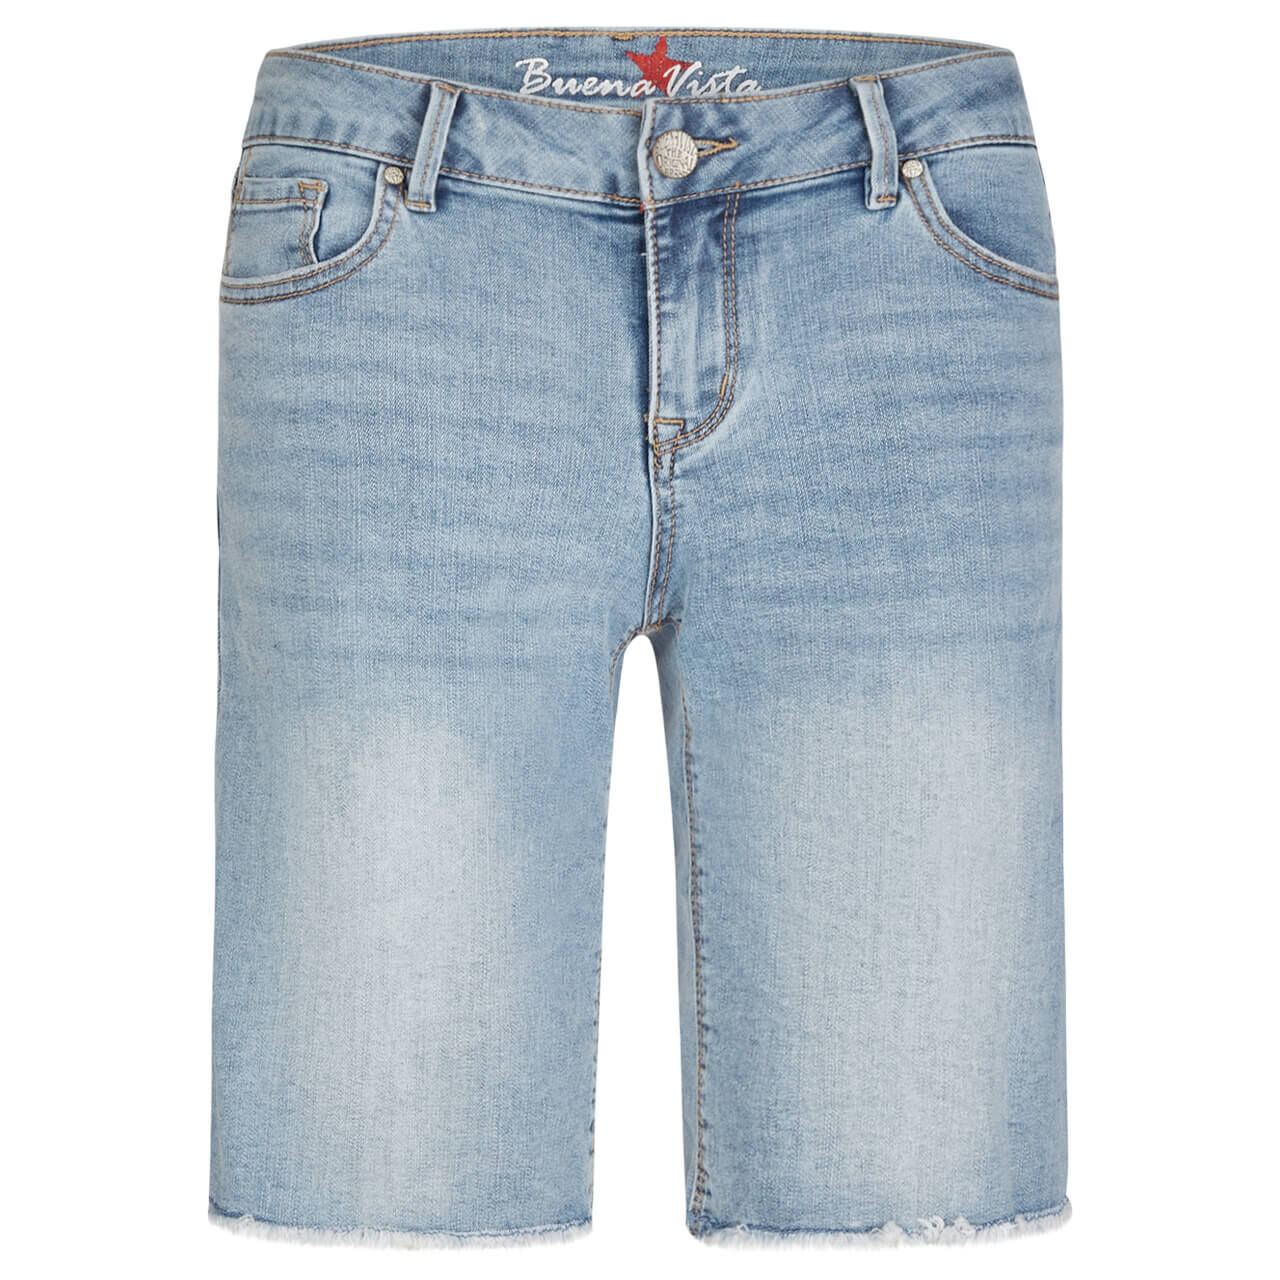 Buena Vista Italy-Short Stretch Denim Jeans used blue